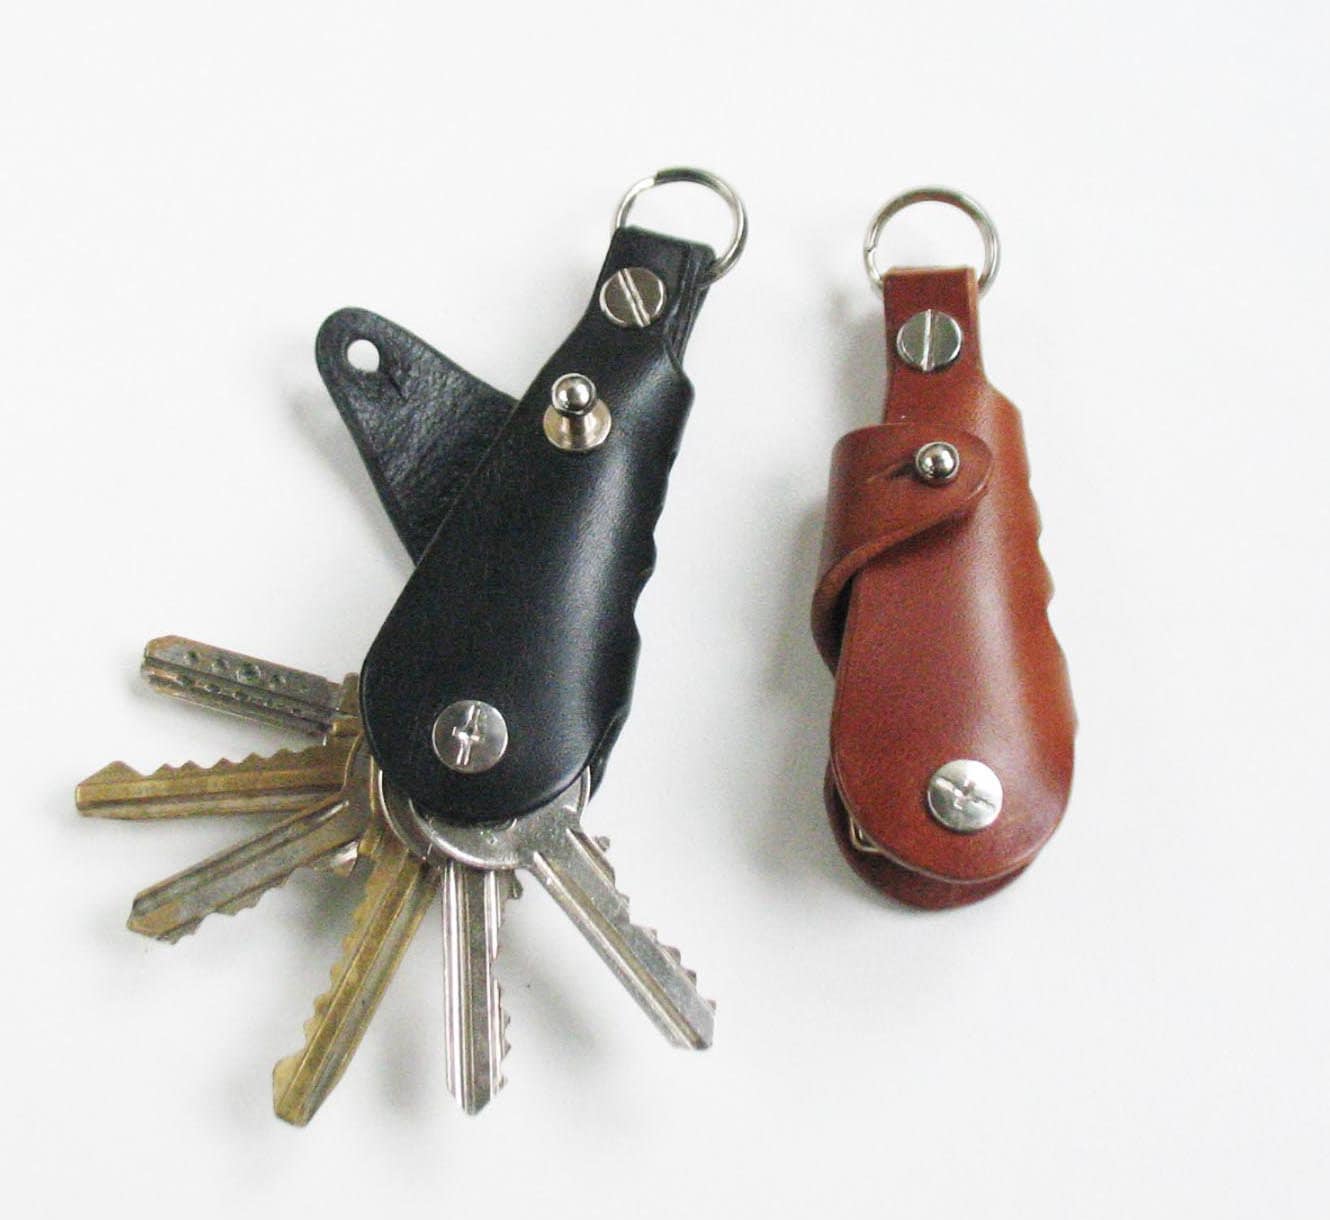 Birsppy Dan Fashion Leather Men Keychain Heart Shape Cute Leather Key Ring Car Key Holder (Black)